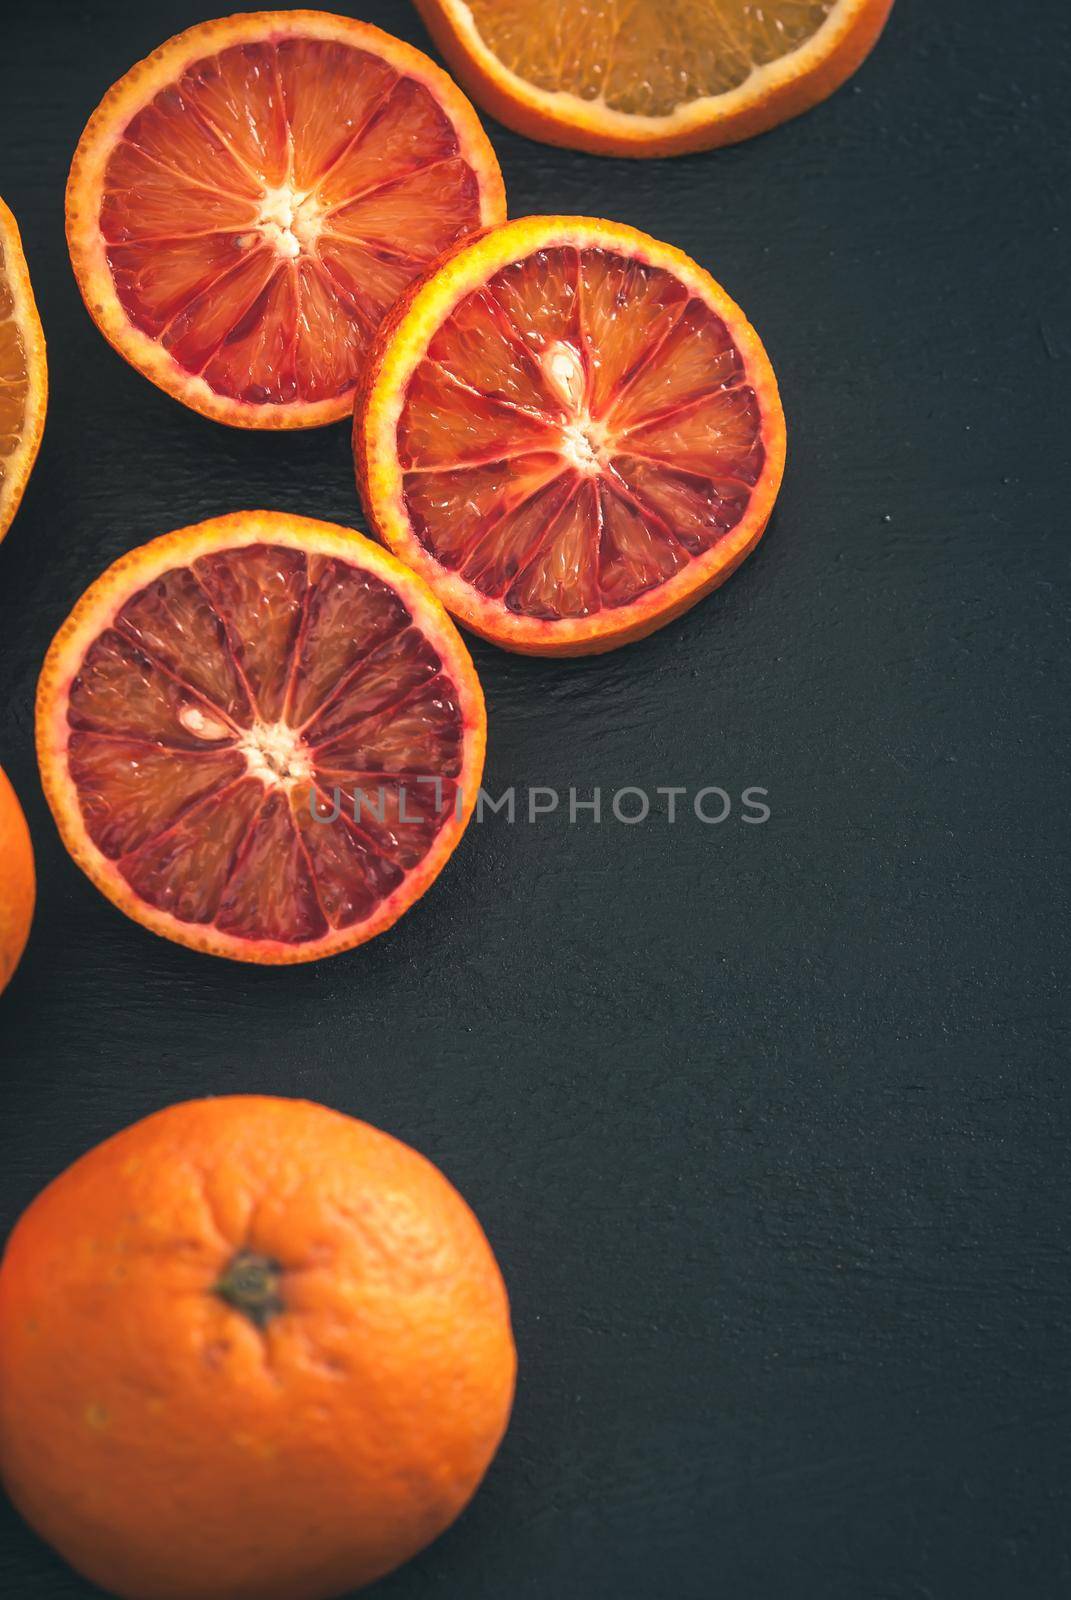 red bloody sicilian oranges on black background